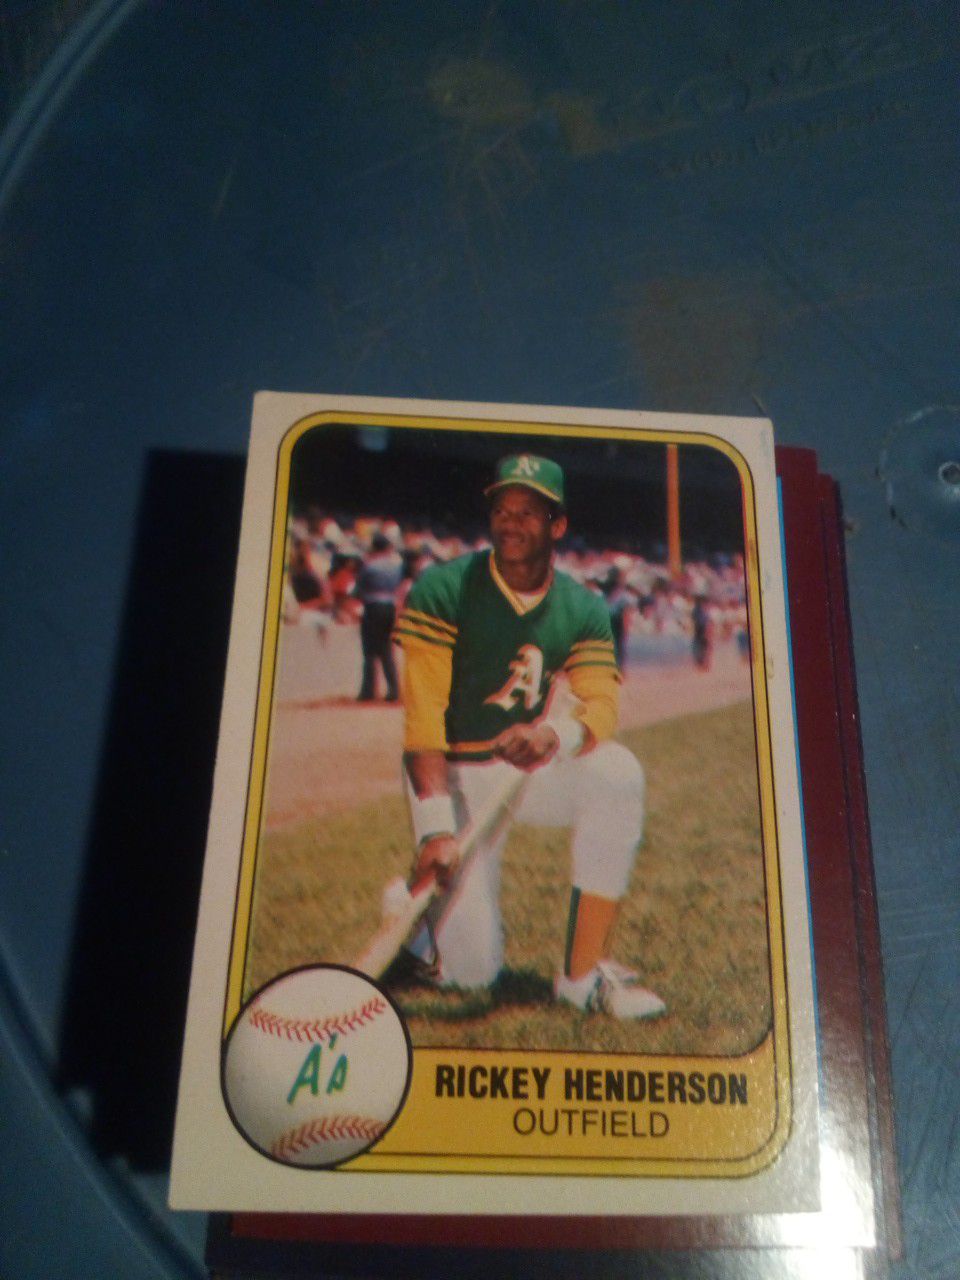 Rick Henderson 2 year baseball card